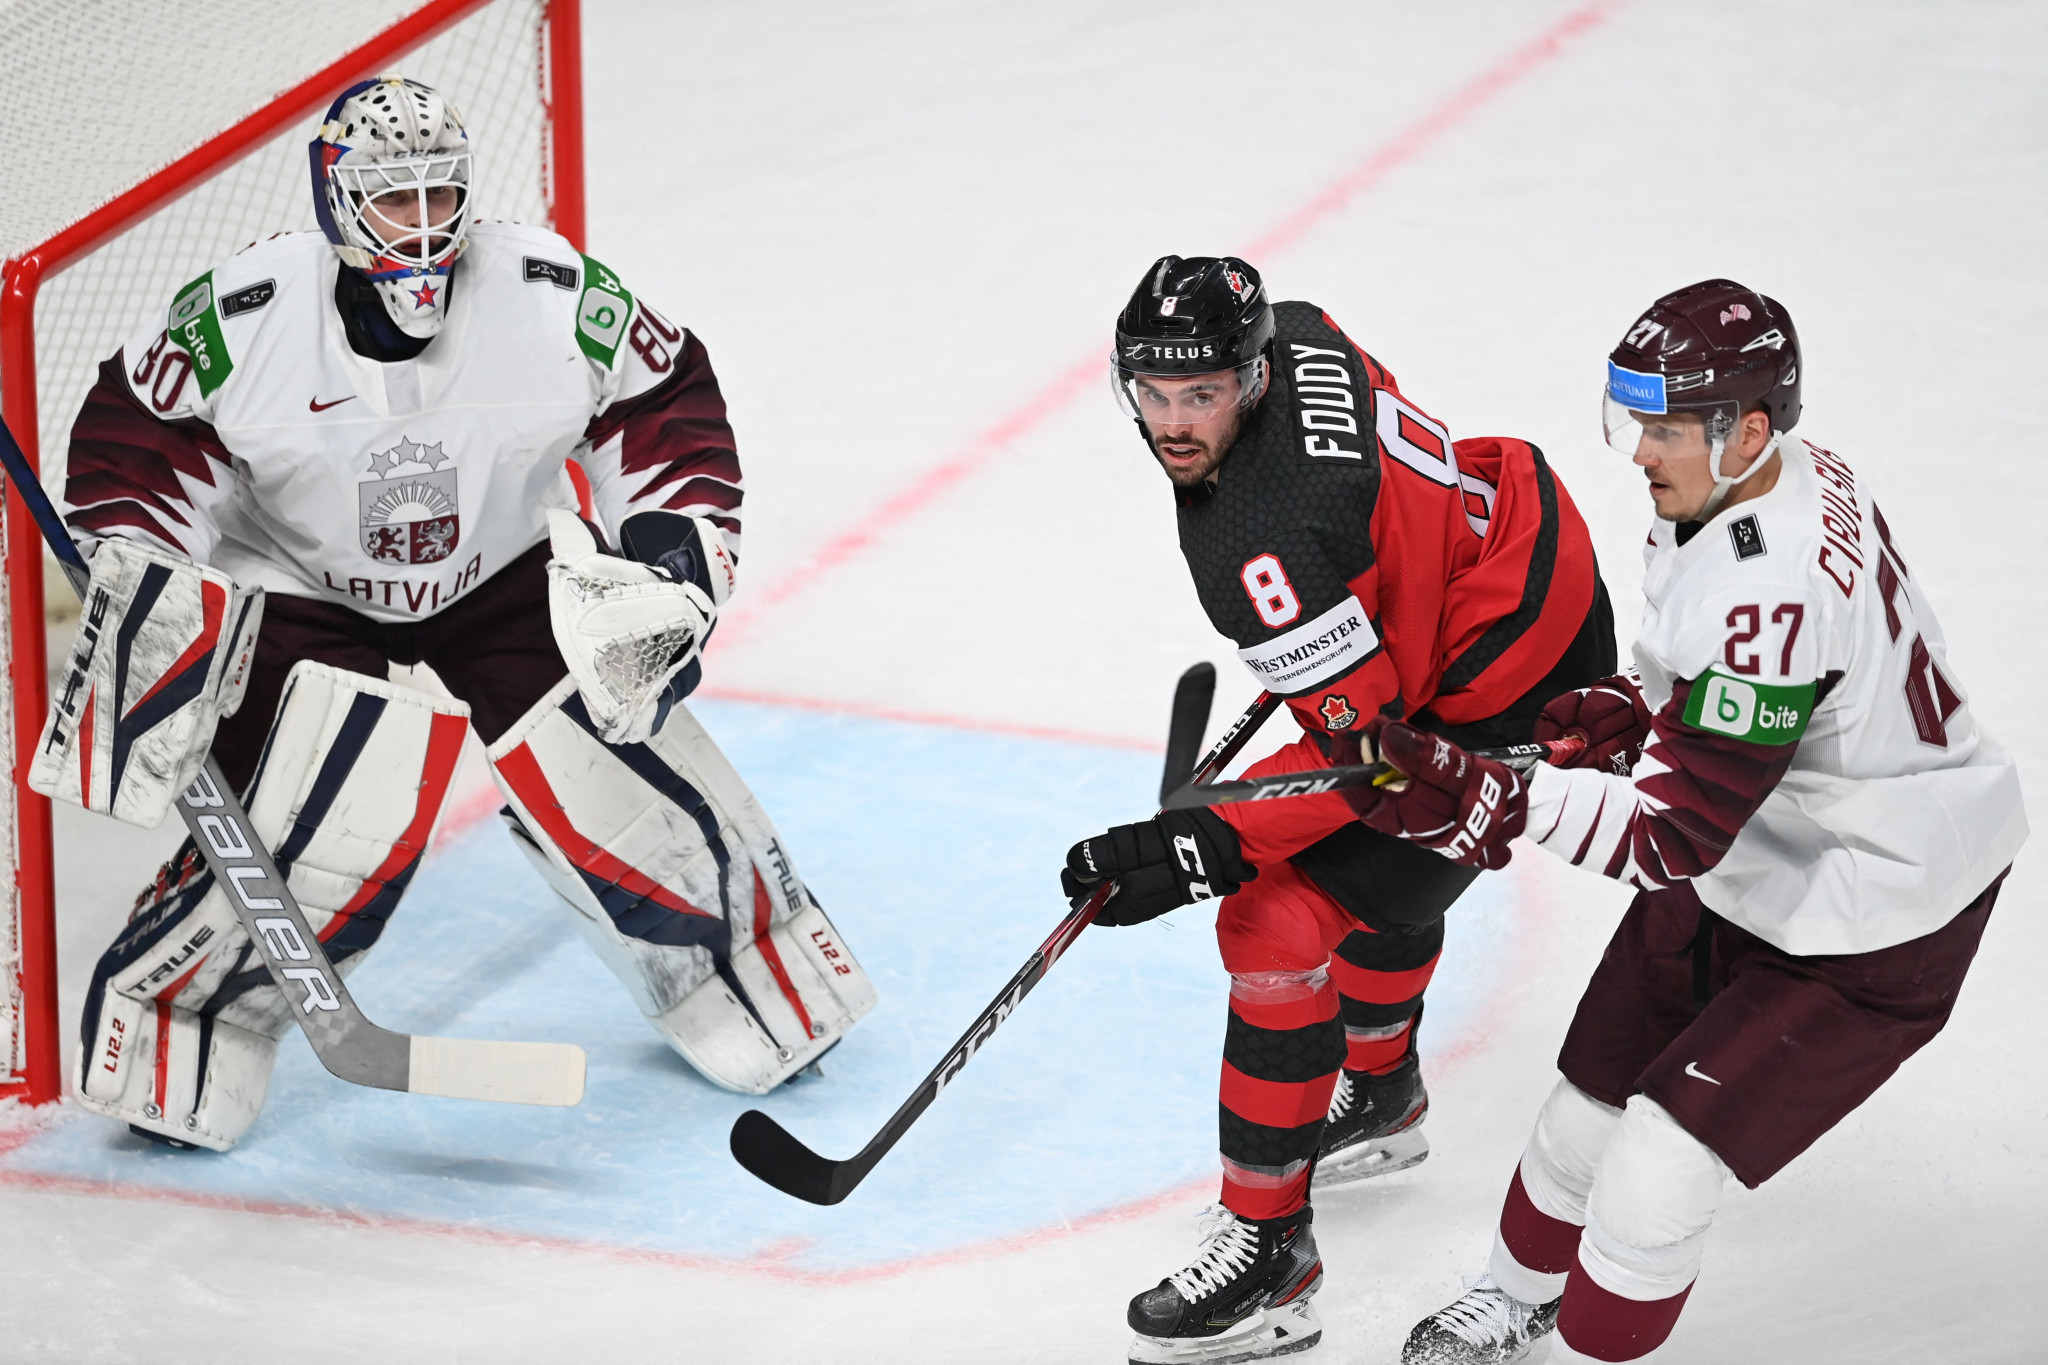 Kivlenieks earns shutout as host Latvia shocks Canada 2-0 at world